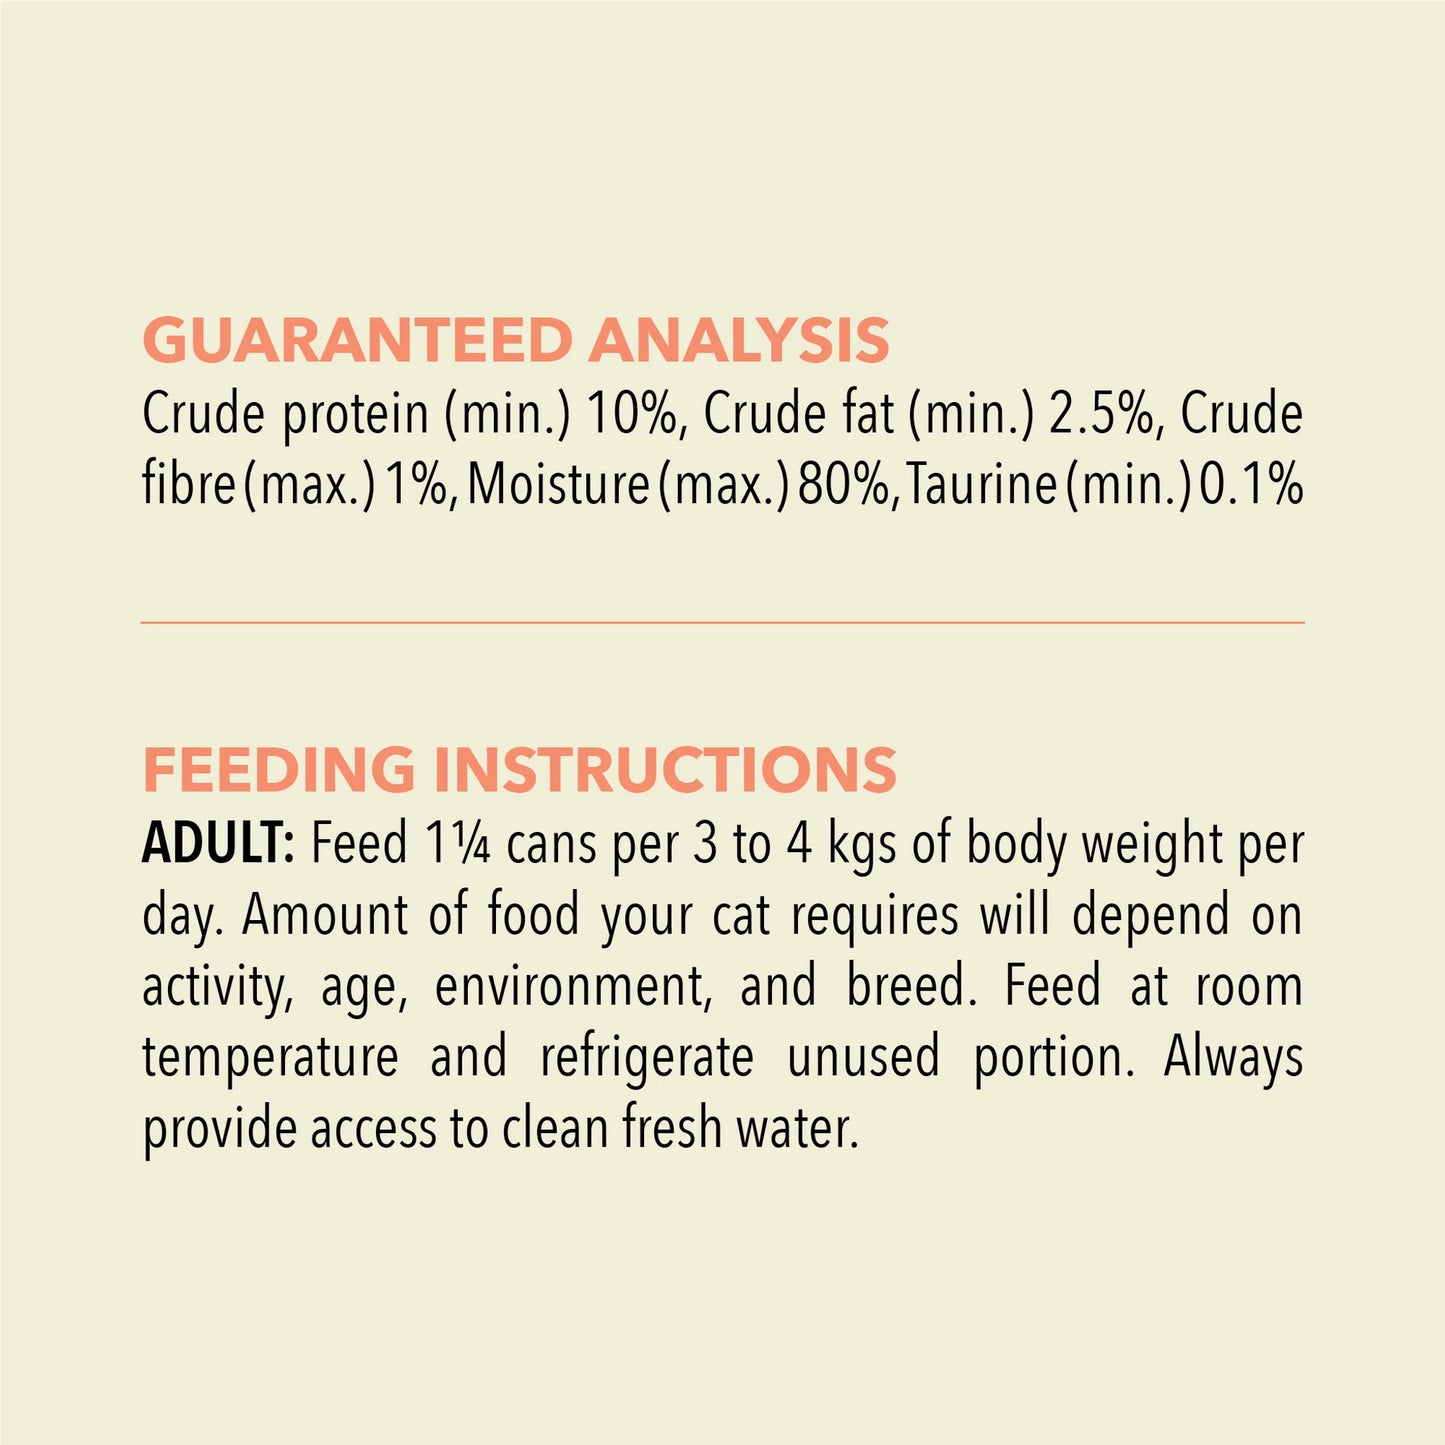 Acana Wet Cat Food Salmon Recipe In Bone Broth  Canned Cat Food  | PetMax Canada